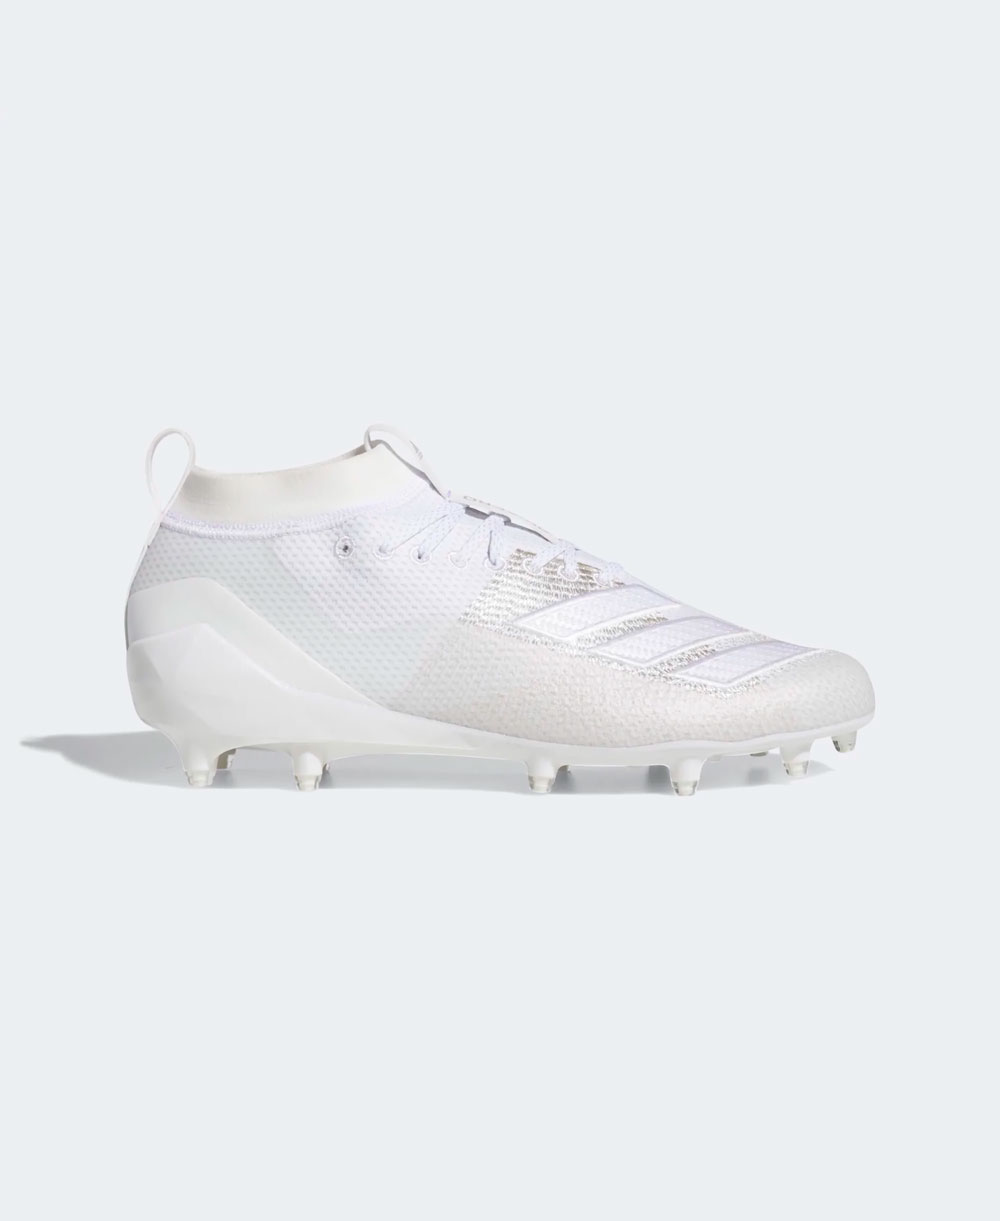 white adidas football cleats